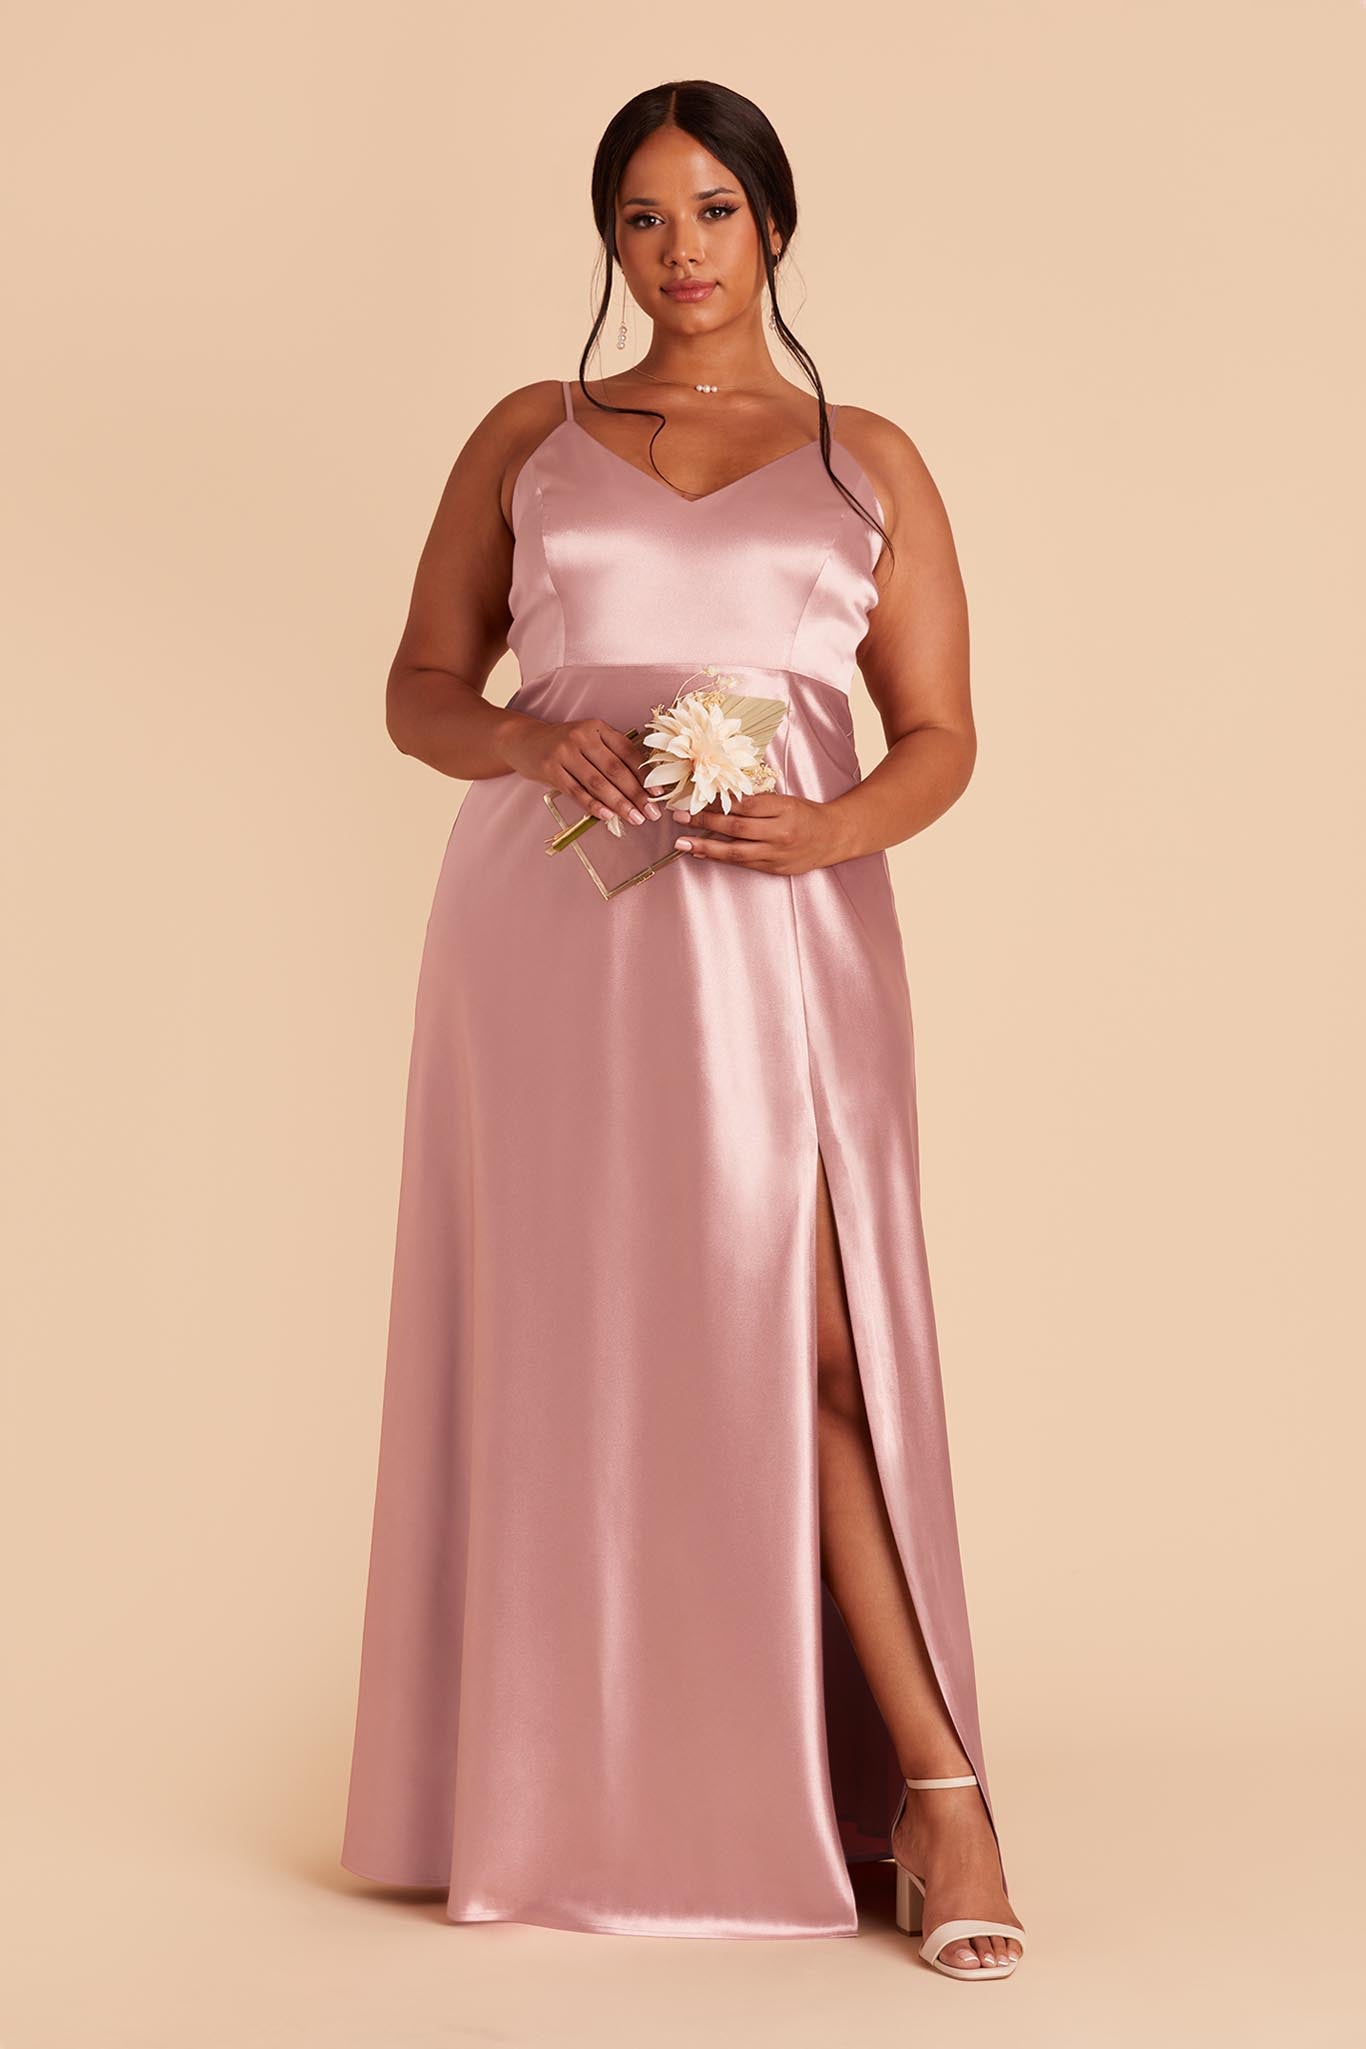 Jay Satin Dress - English Rose